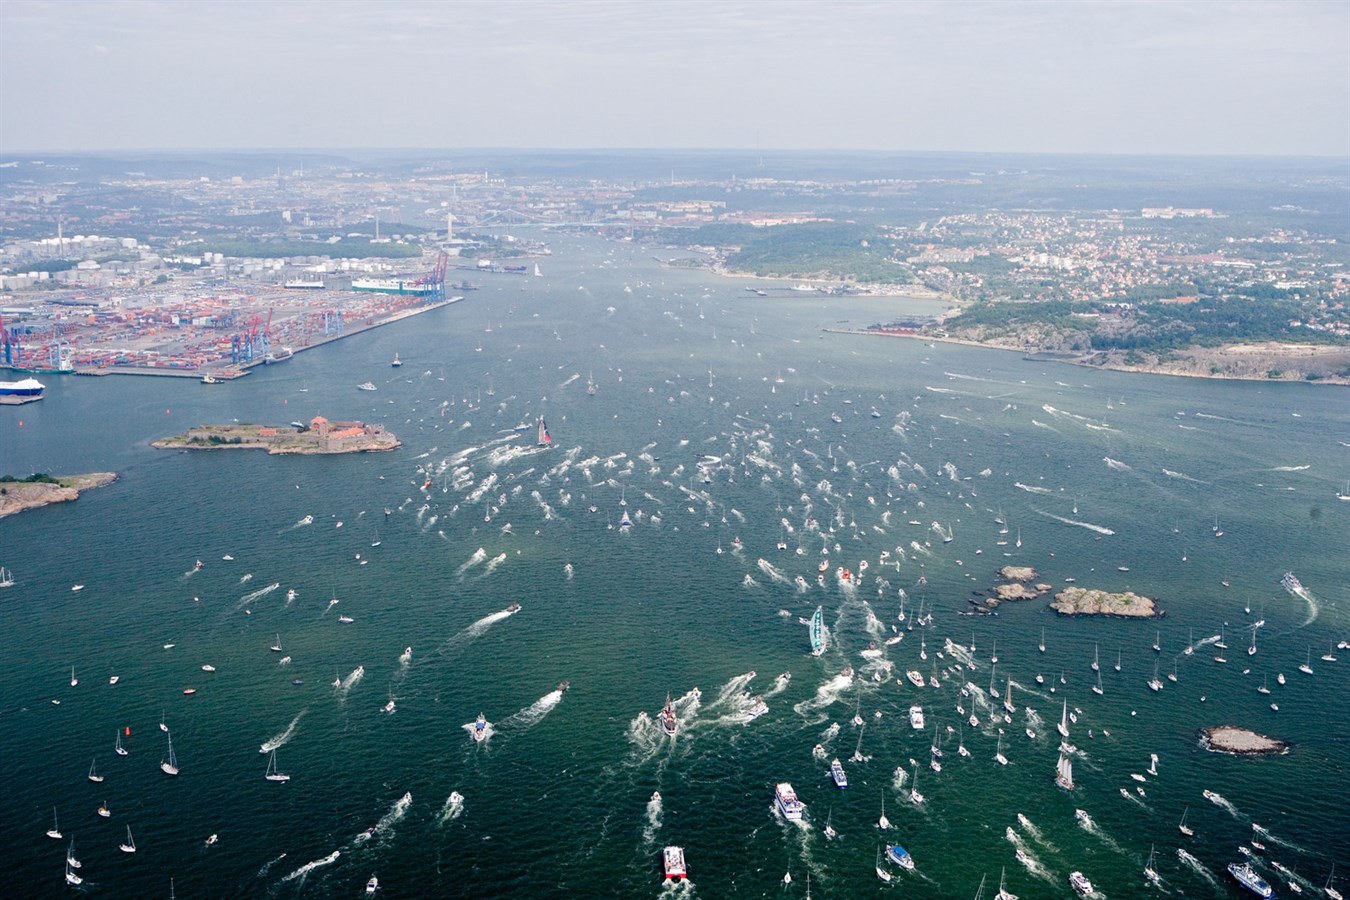 Gothenburg to stage Volvo Ocean Race finale in 2015